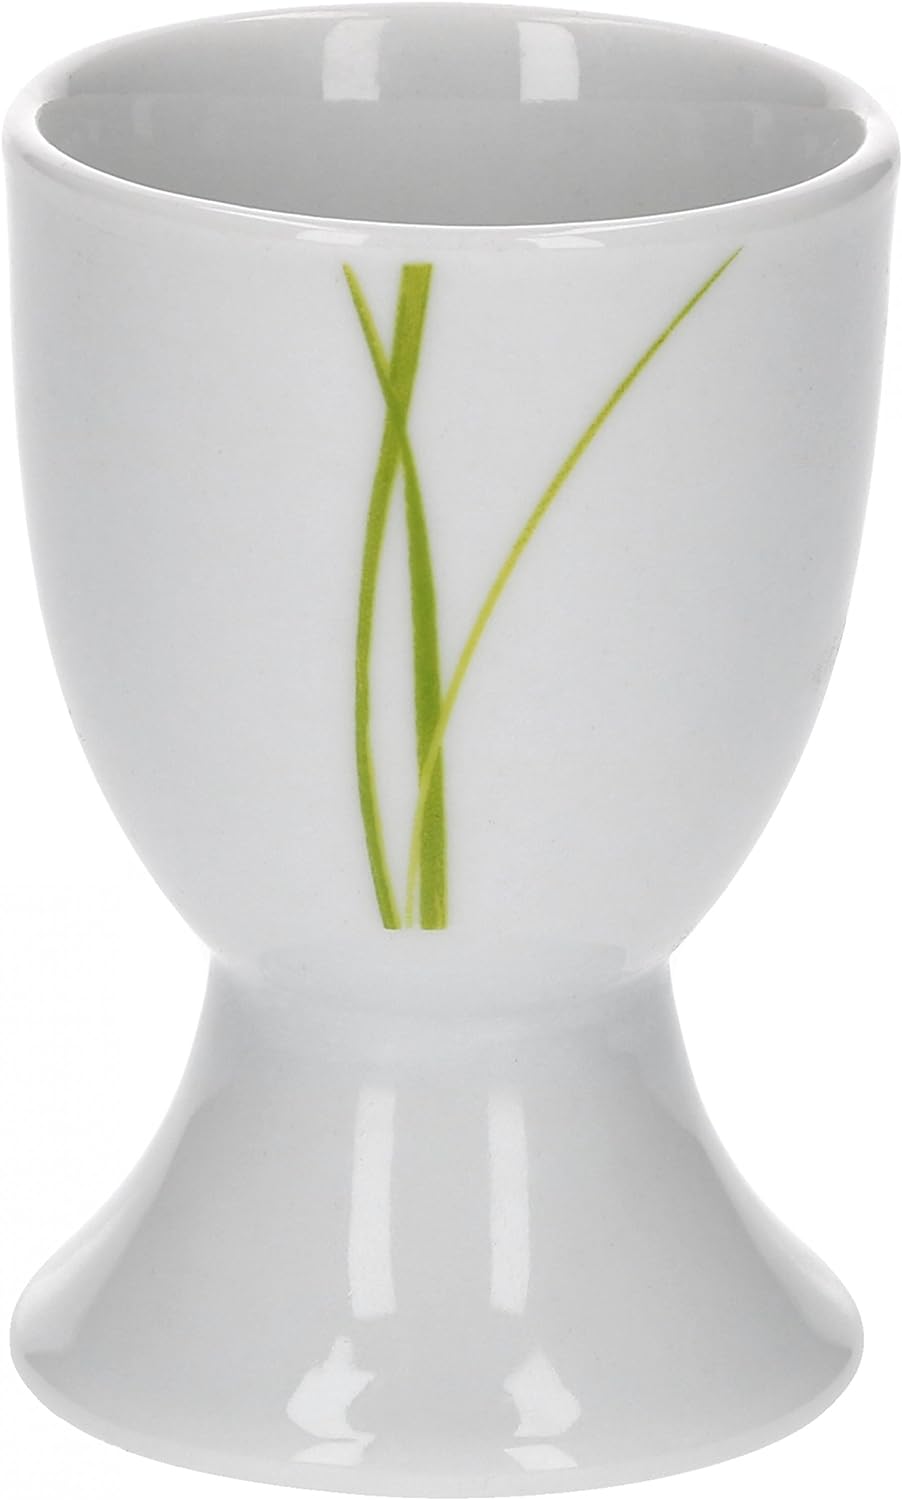 Van Well Bali Set of 6 Egg Cups Round Diameter 4.8 cm Height 7.0 cm Line Decoration Elegant Branded Porcelain